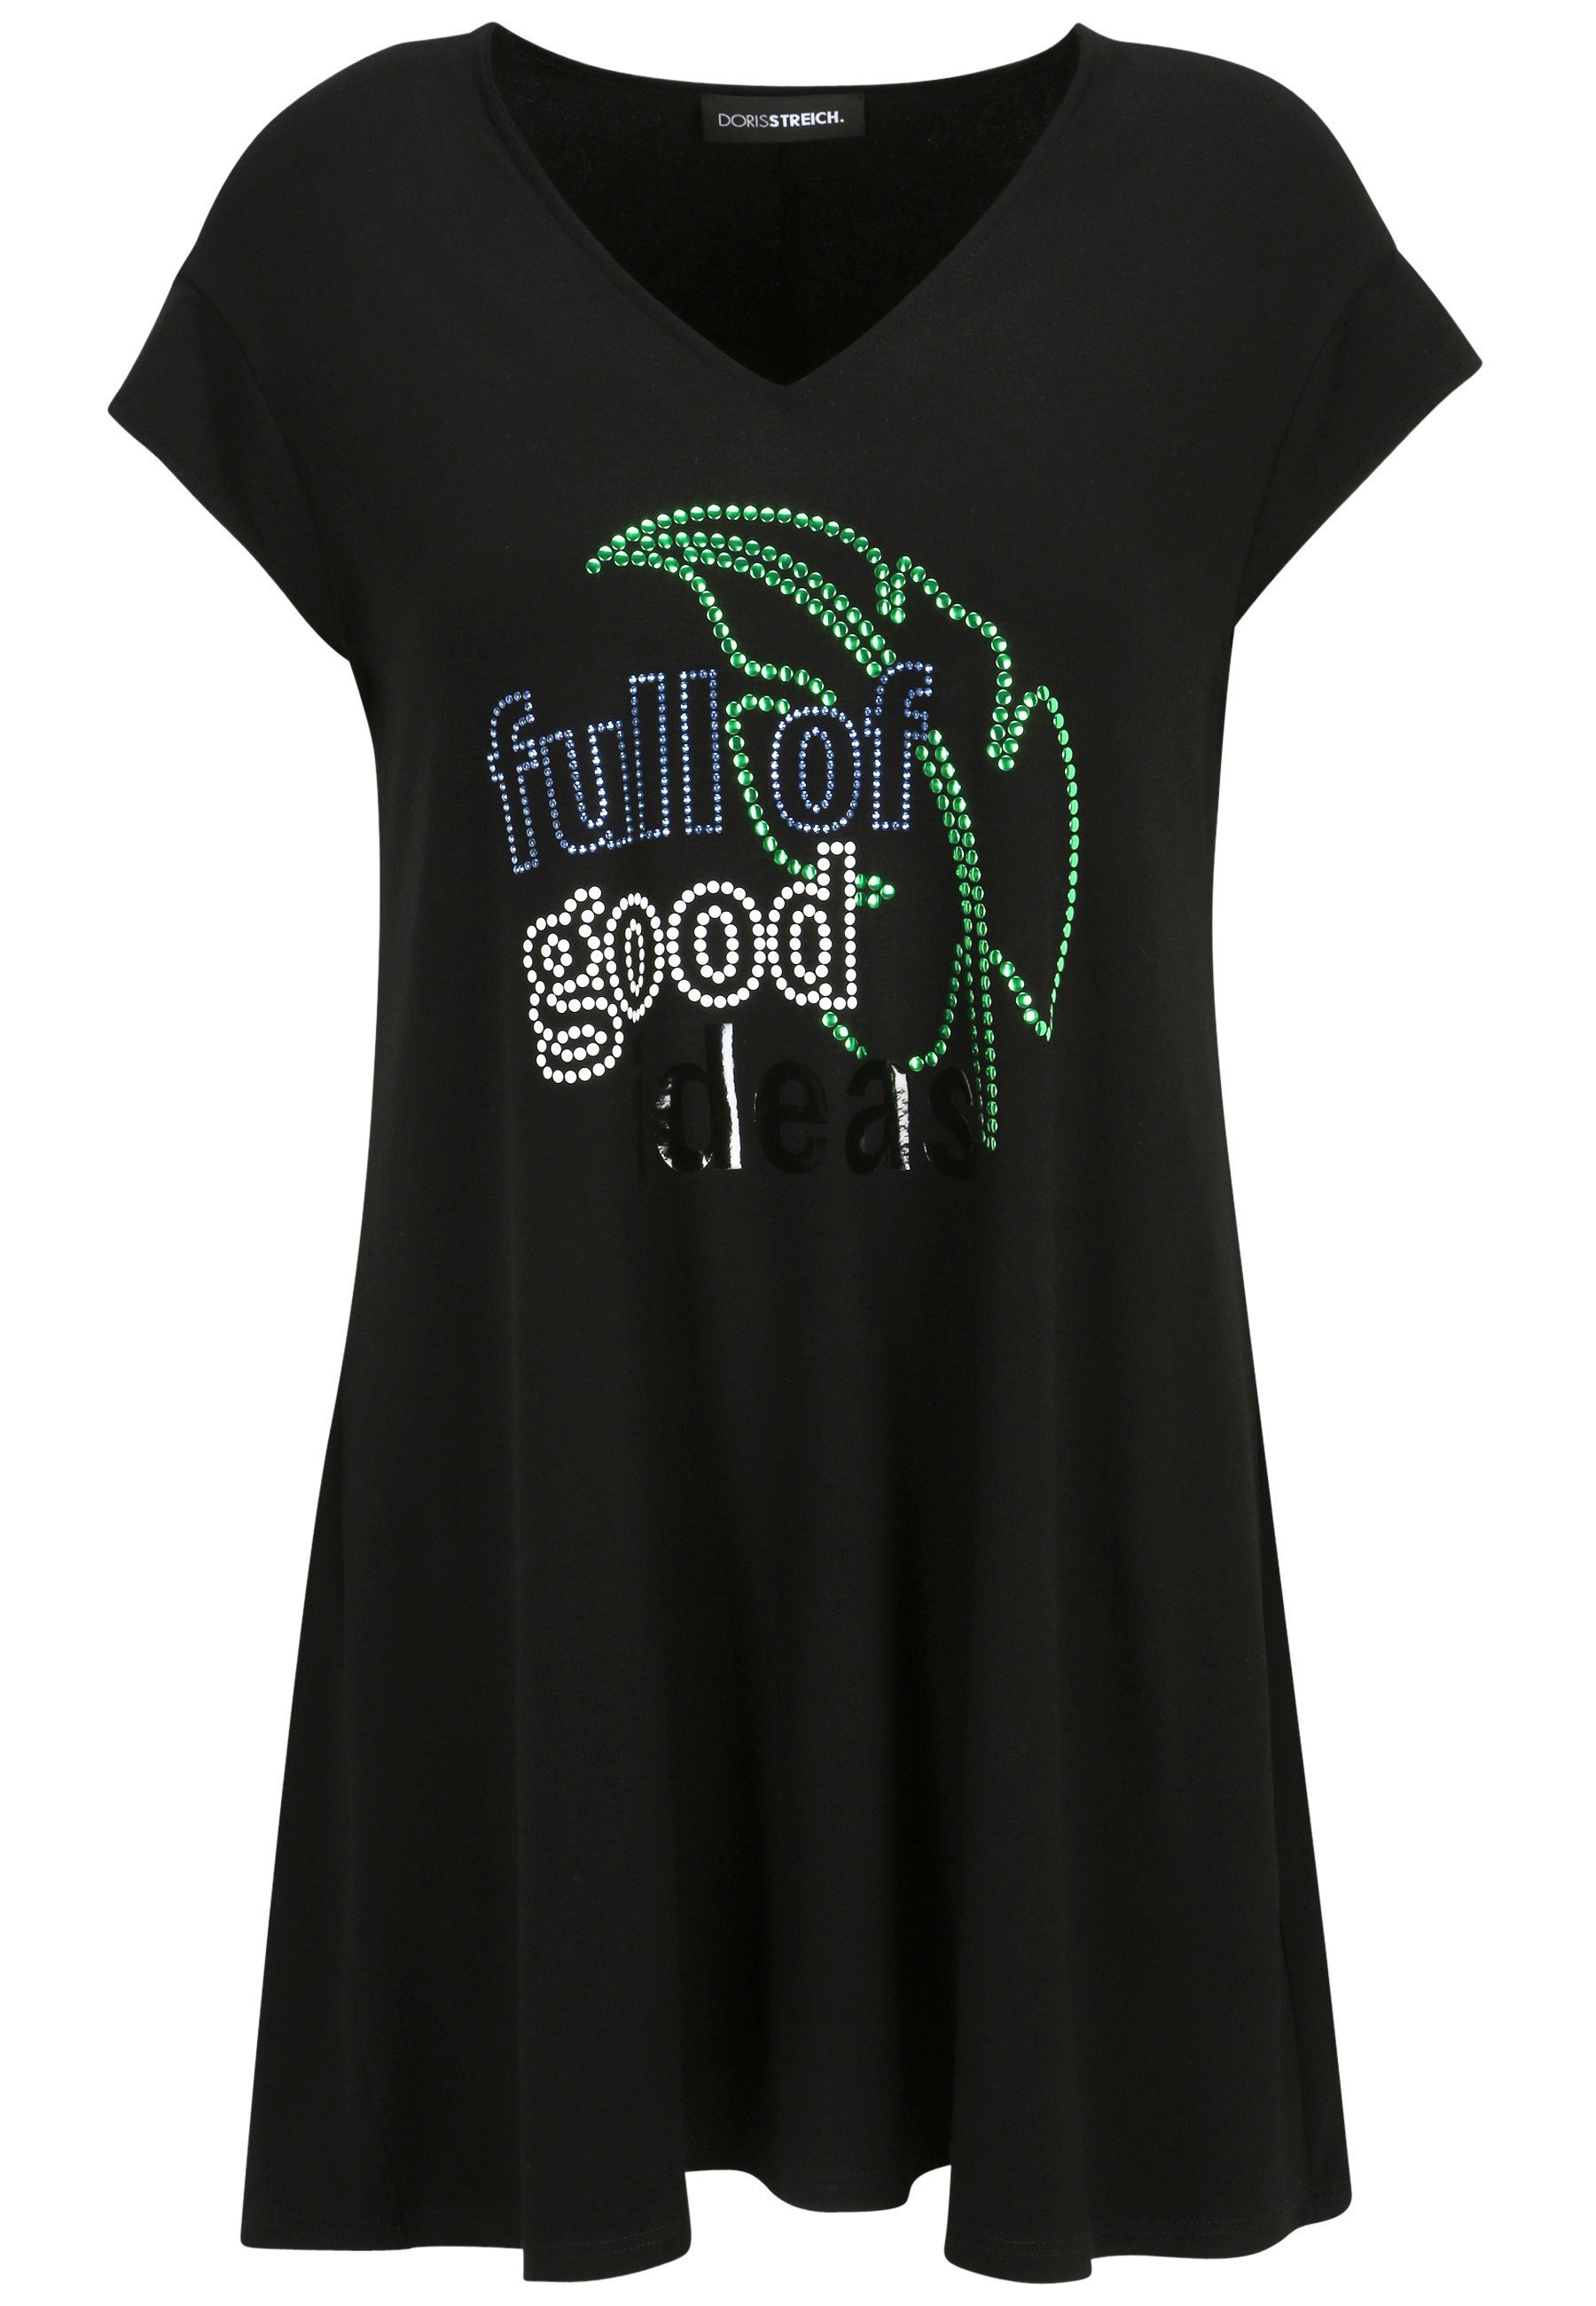 Doris Streich Shirtbluse Long-Shirt of "Full Ideas"